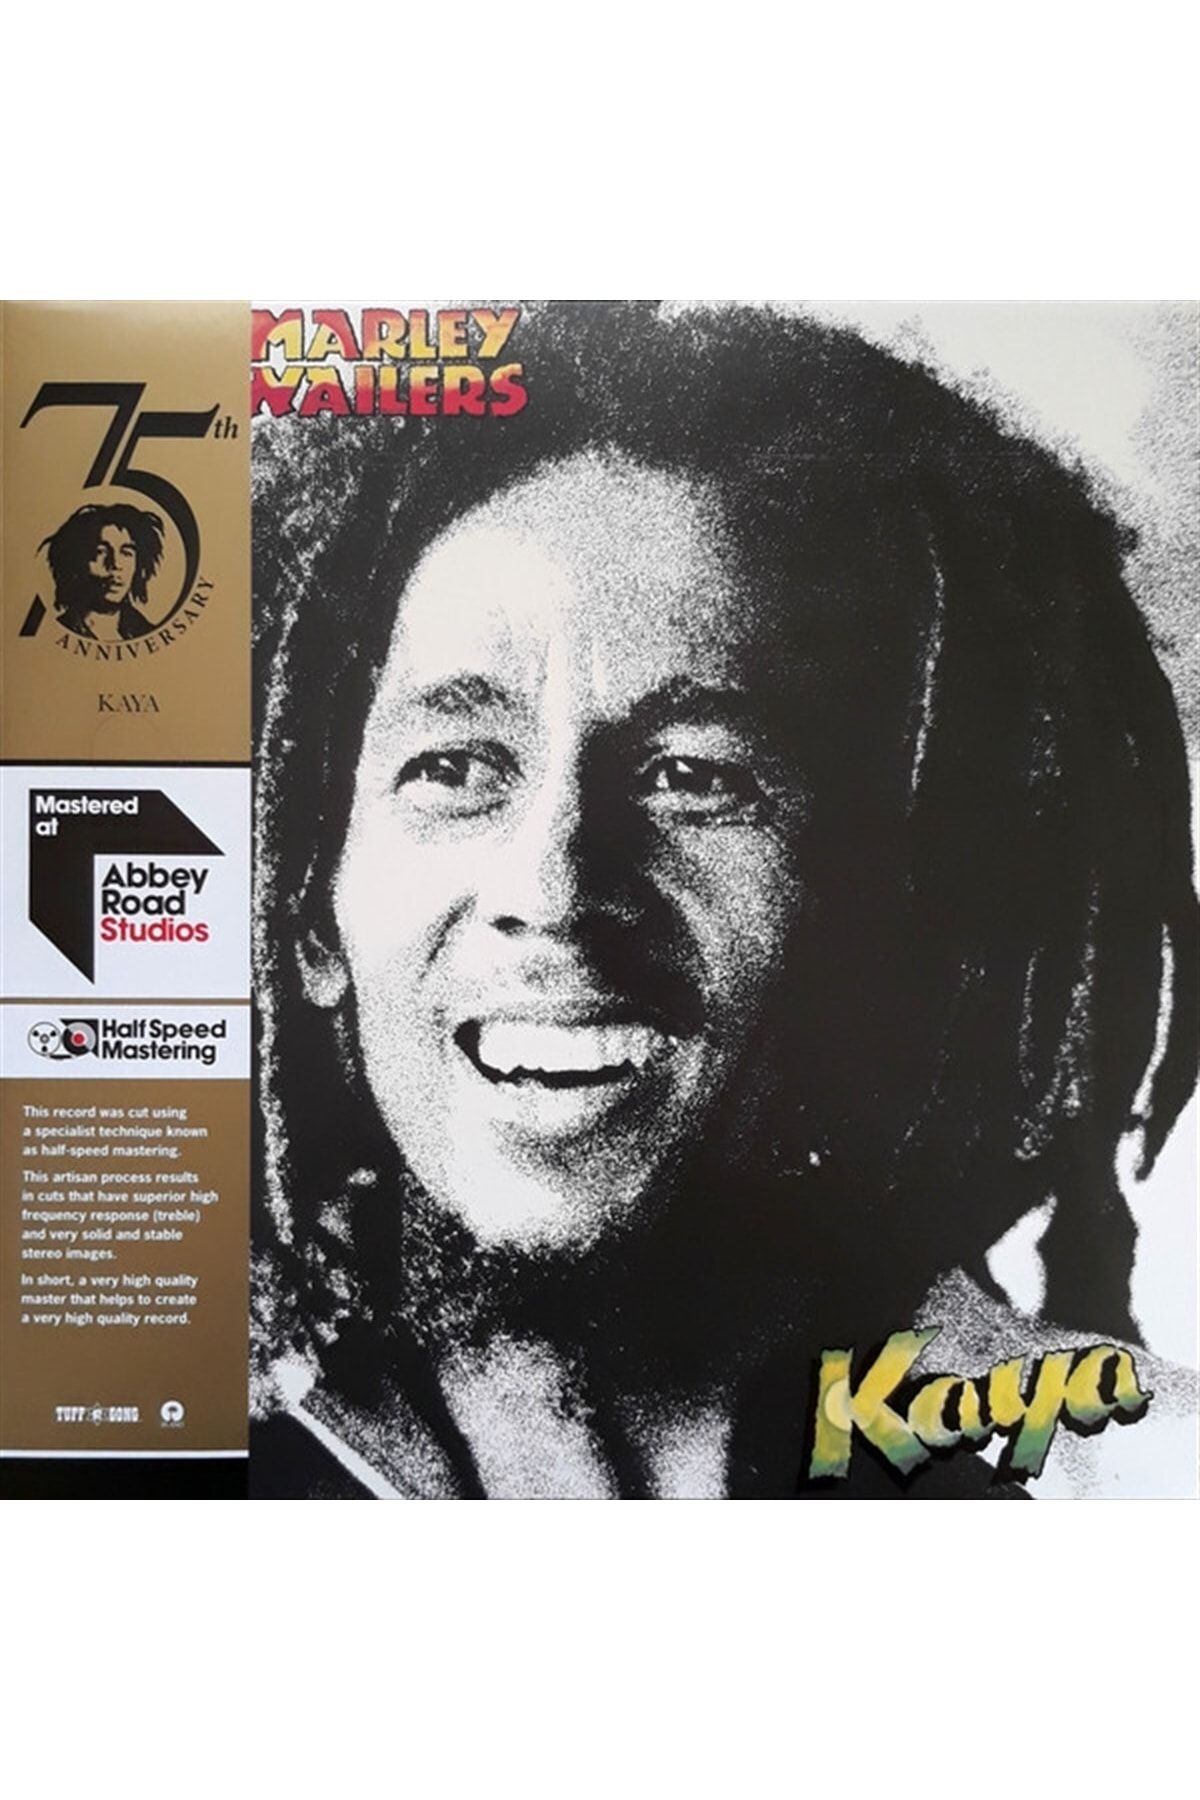 RNBW45 Bob Marley & The Waılers - Kaya - Limitli Baskı Plak